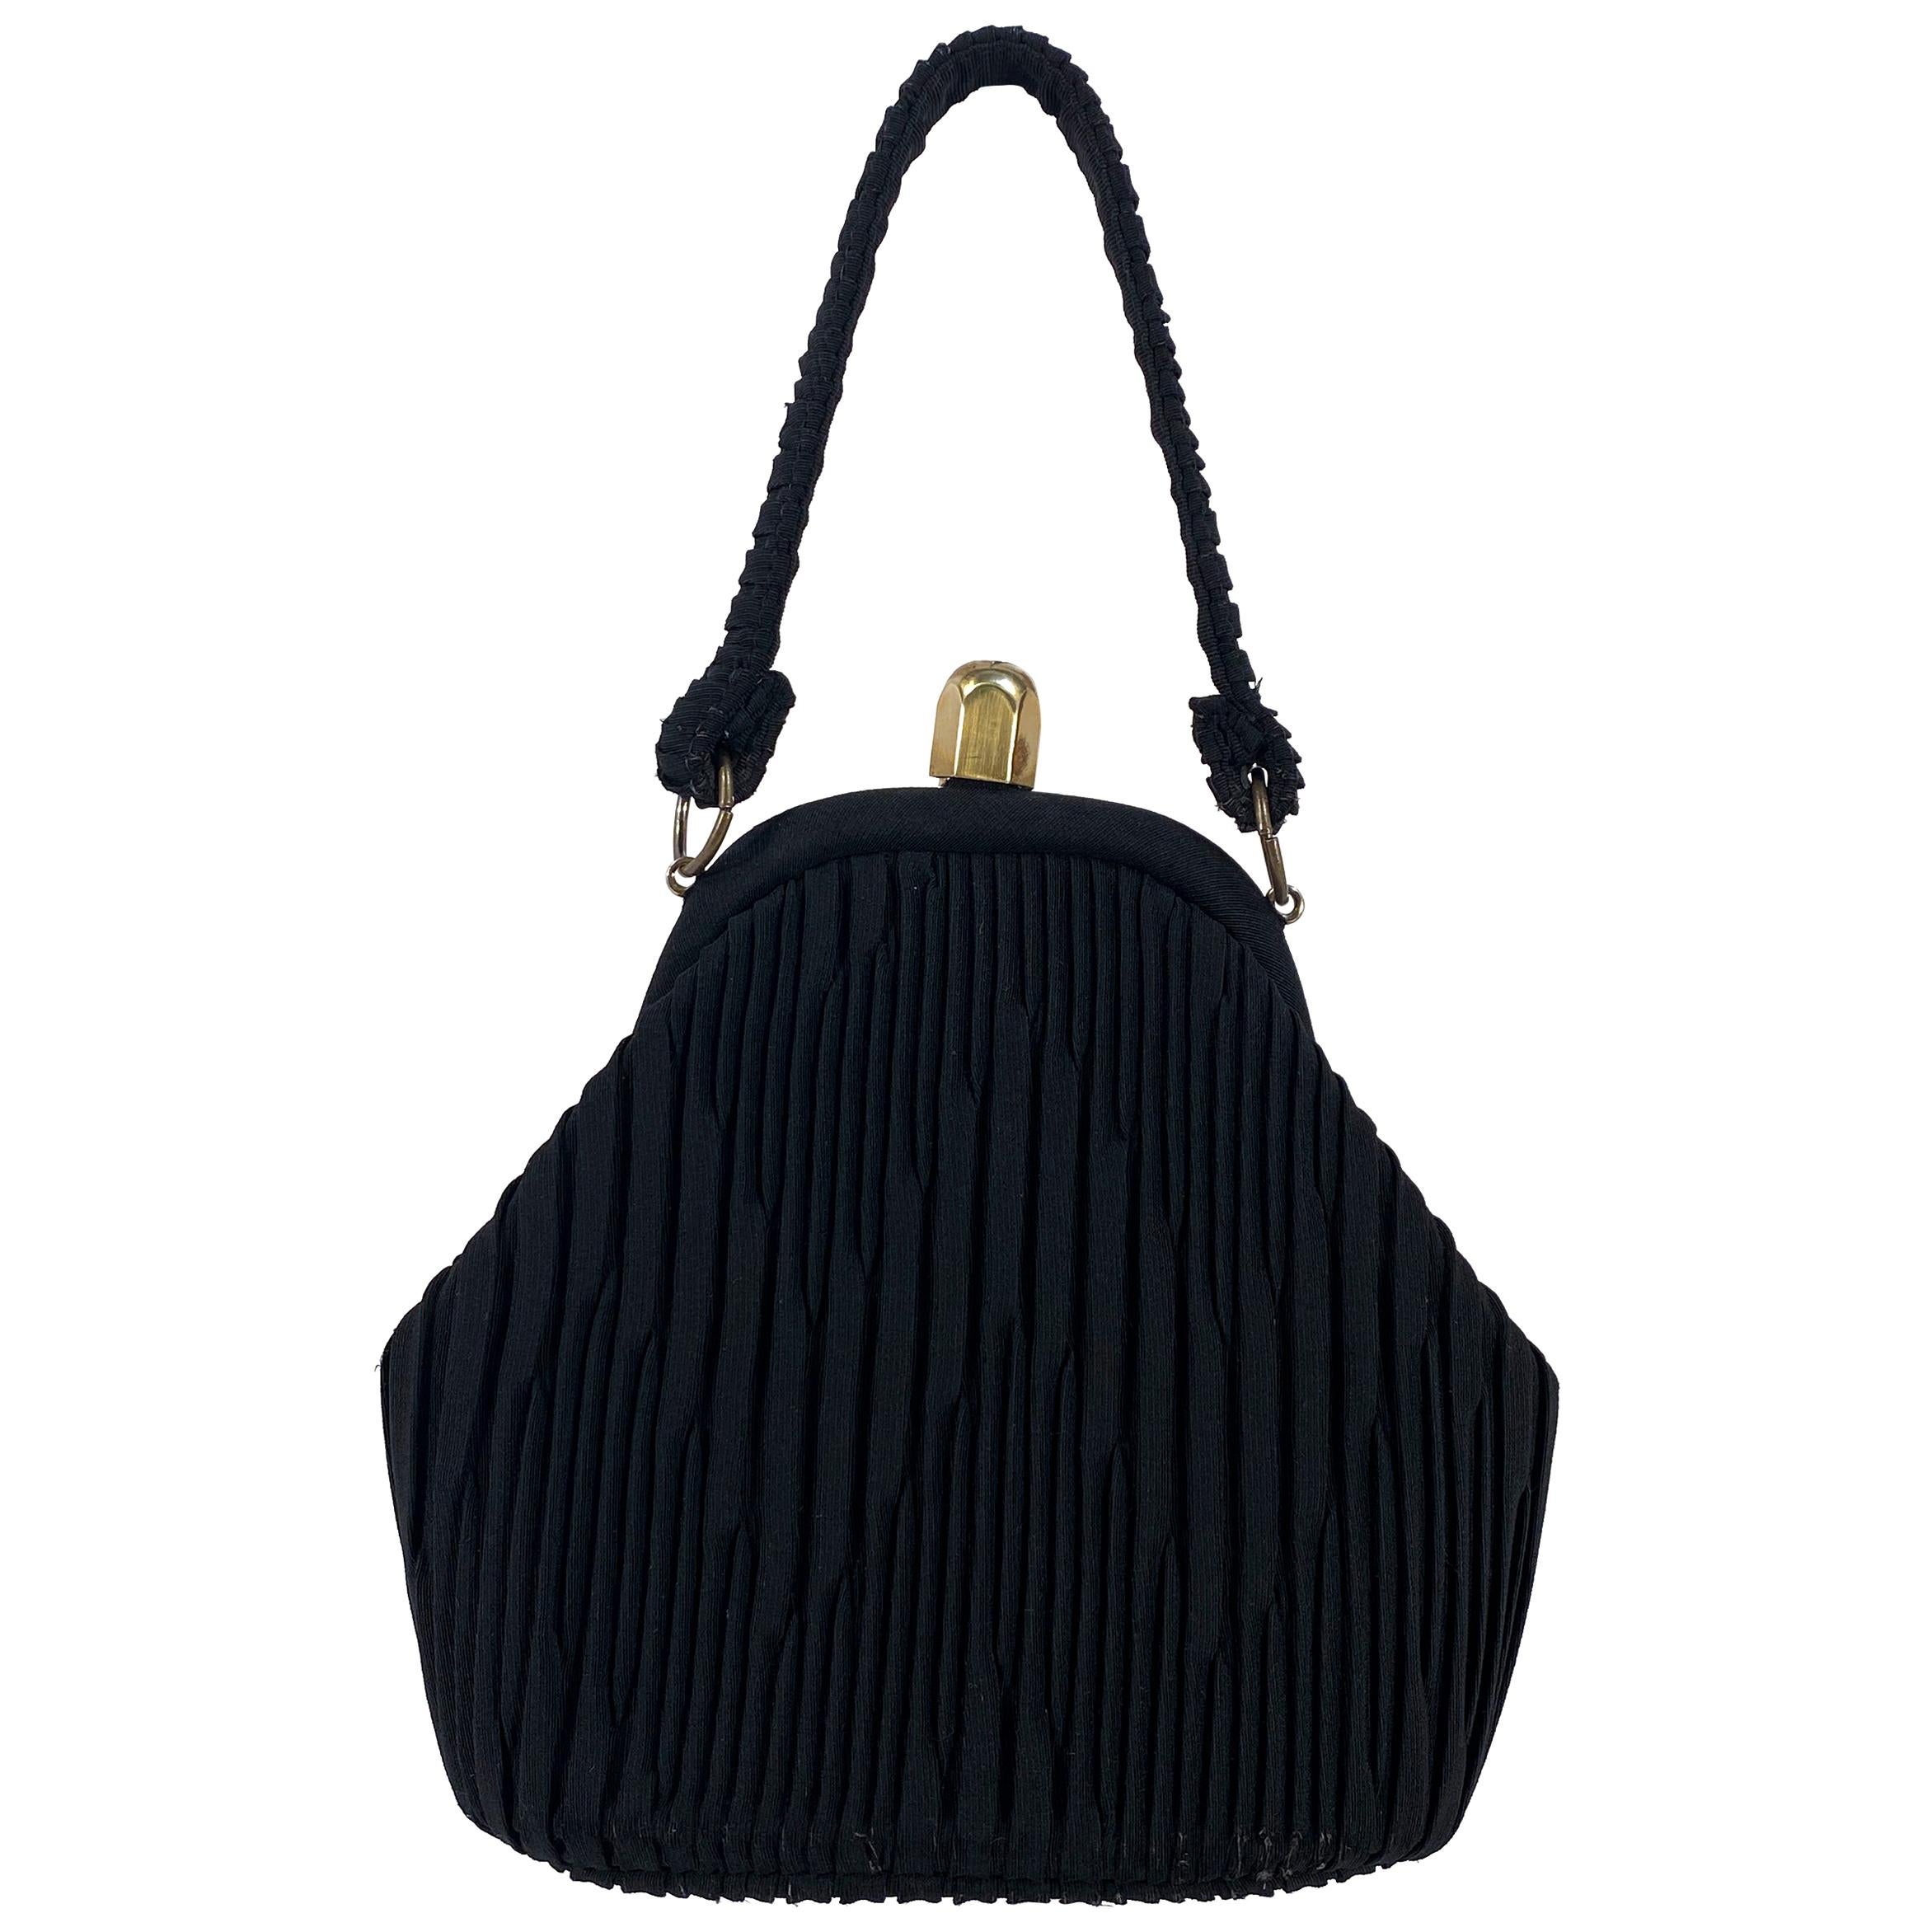 1930s Black Art Deco Handbag with Decorative Pleating For Sale